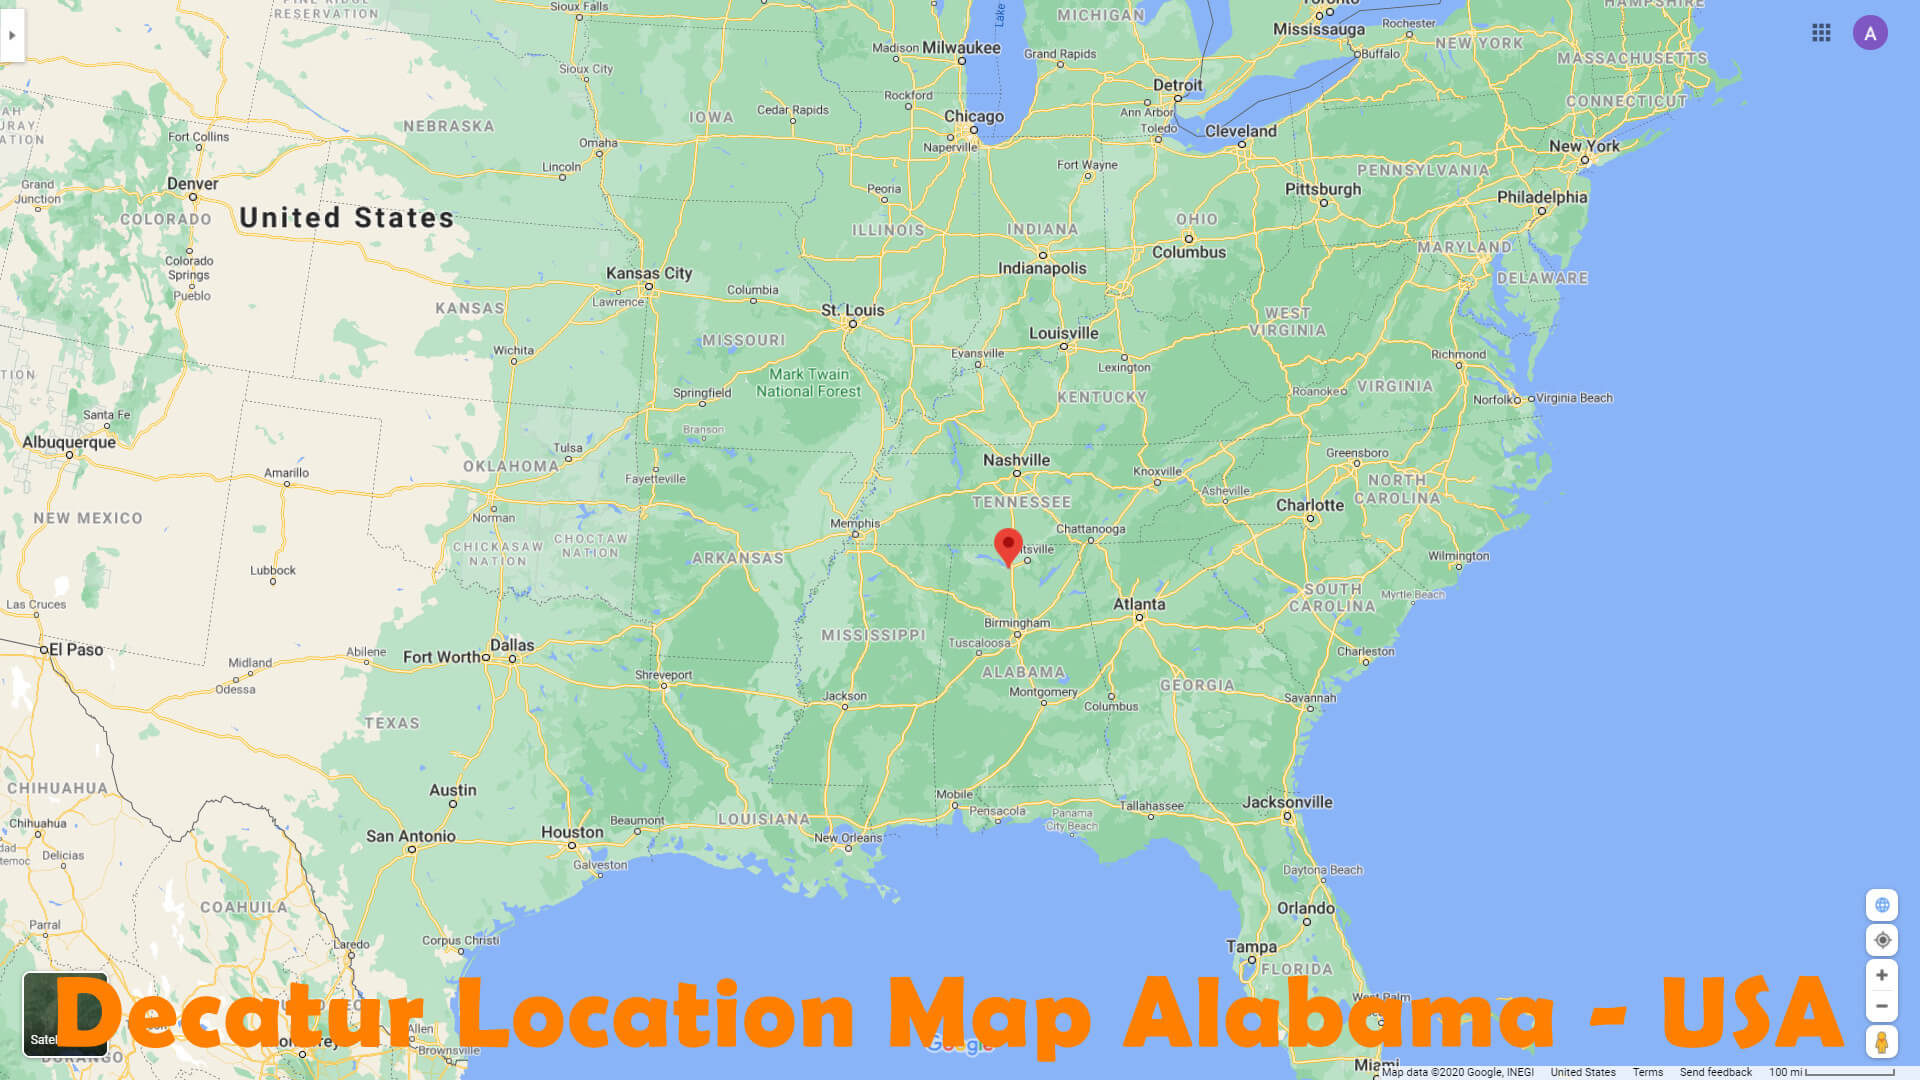 Decatur Location Map Alabama   USA